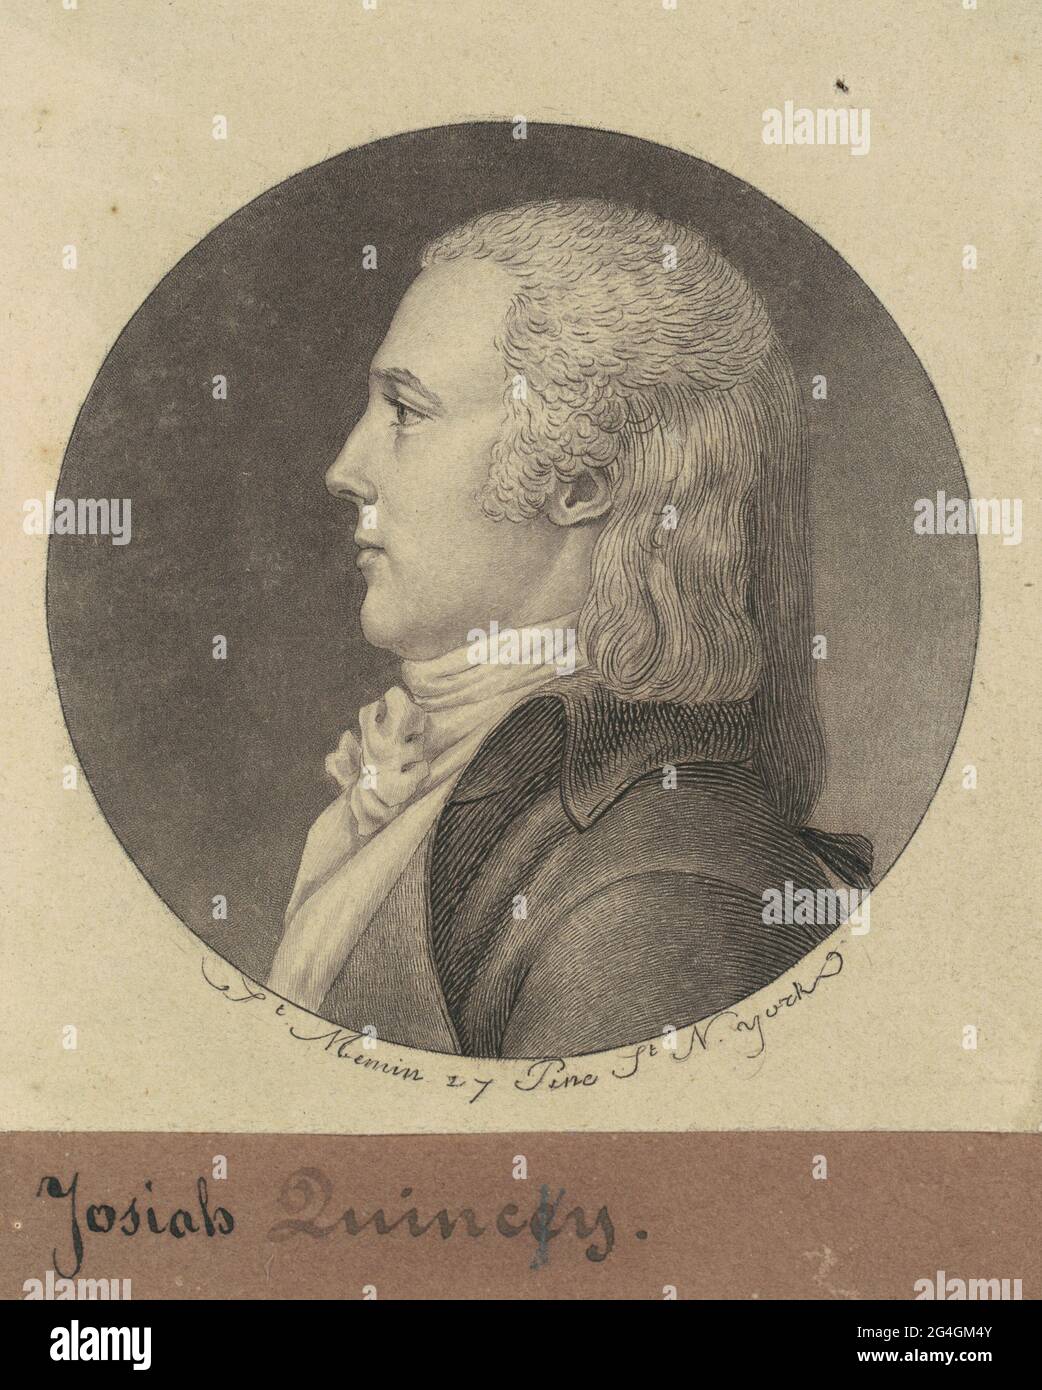 Josiah Quincy, 1796-1797. Stock Photo